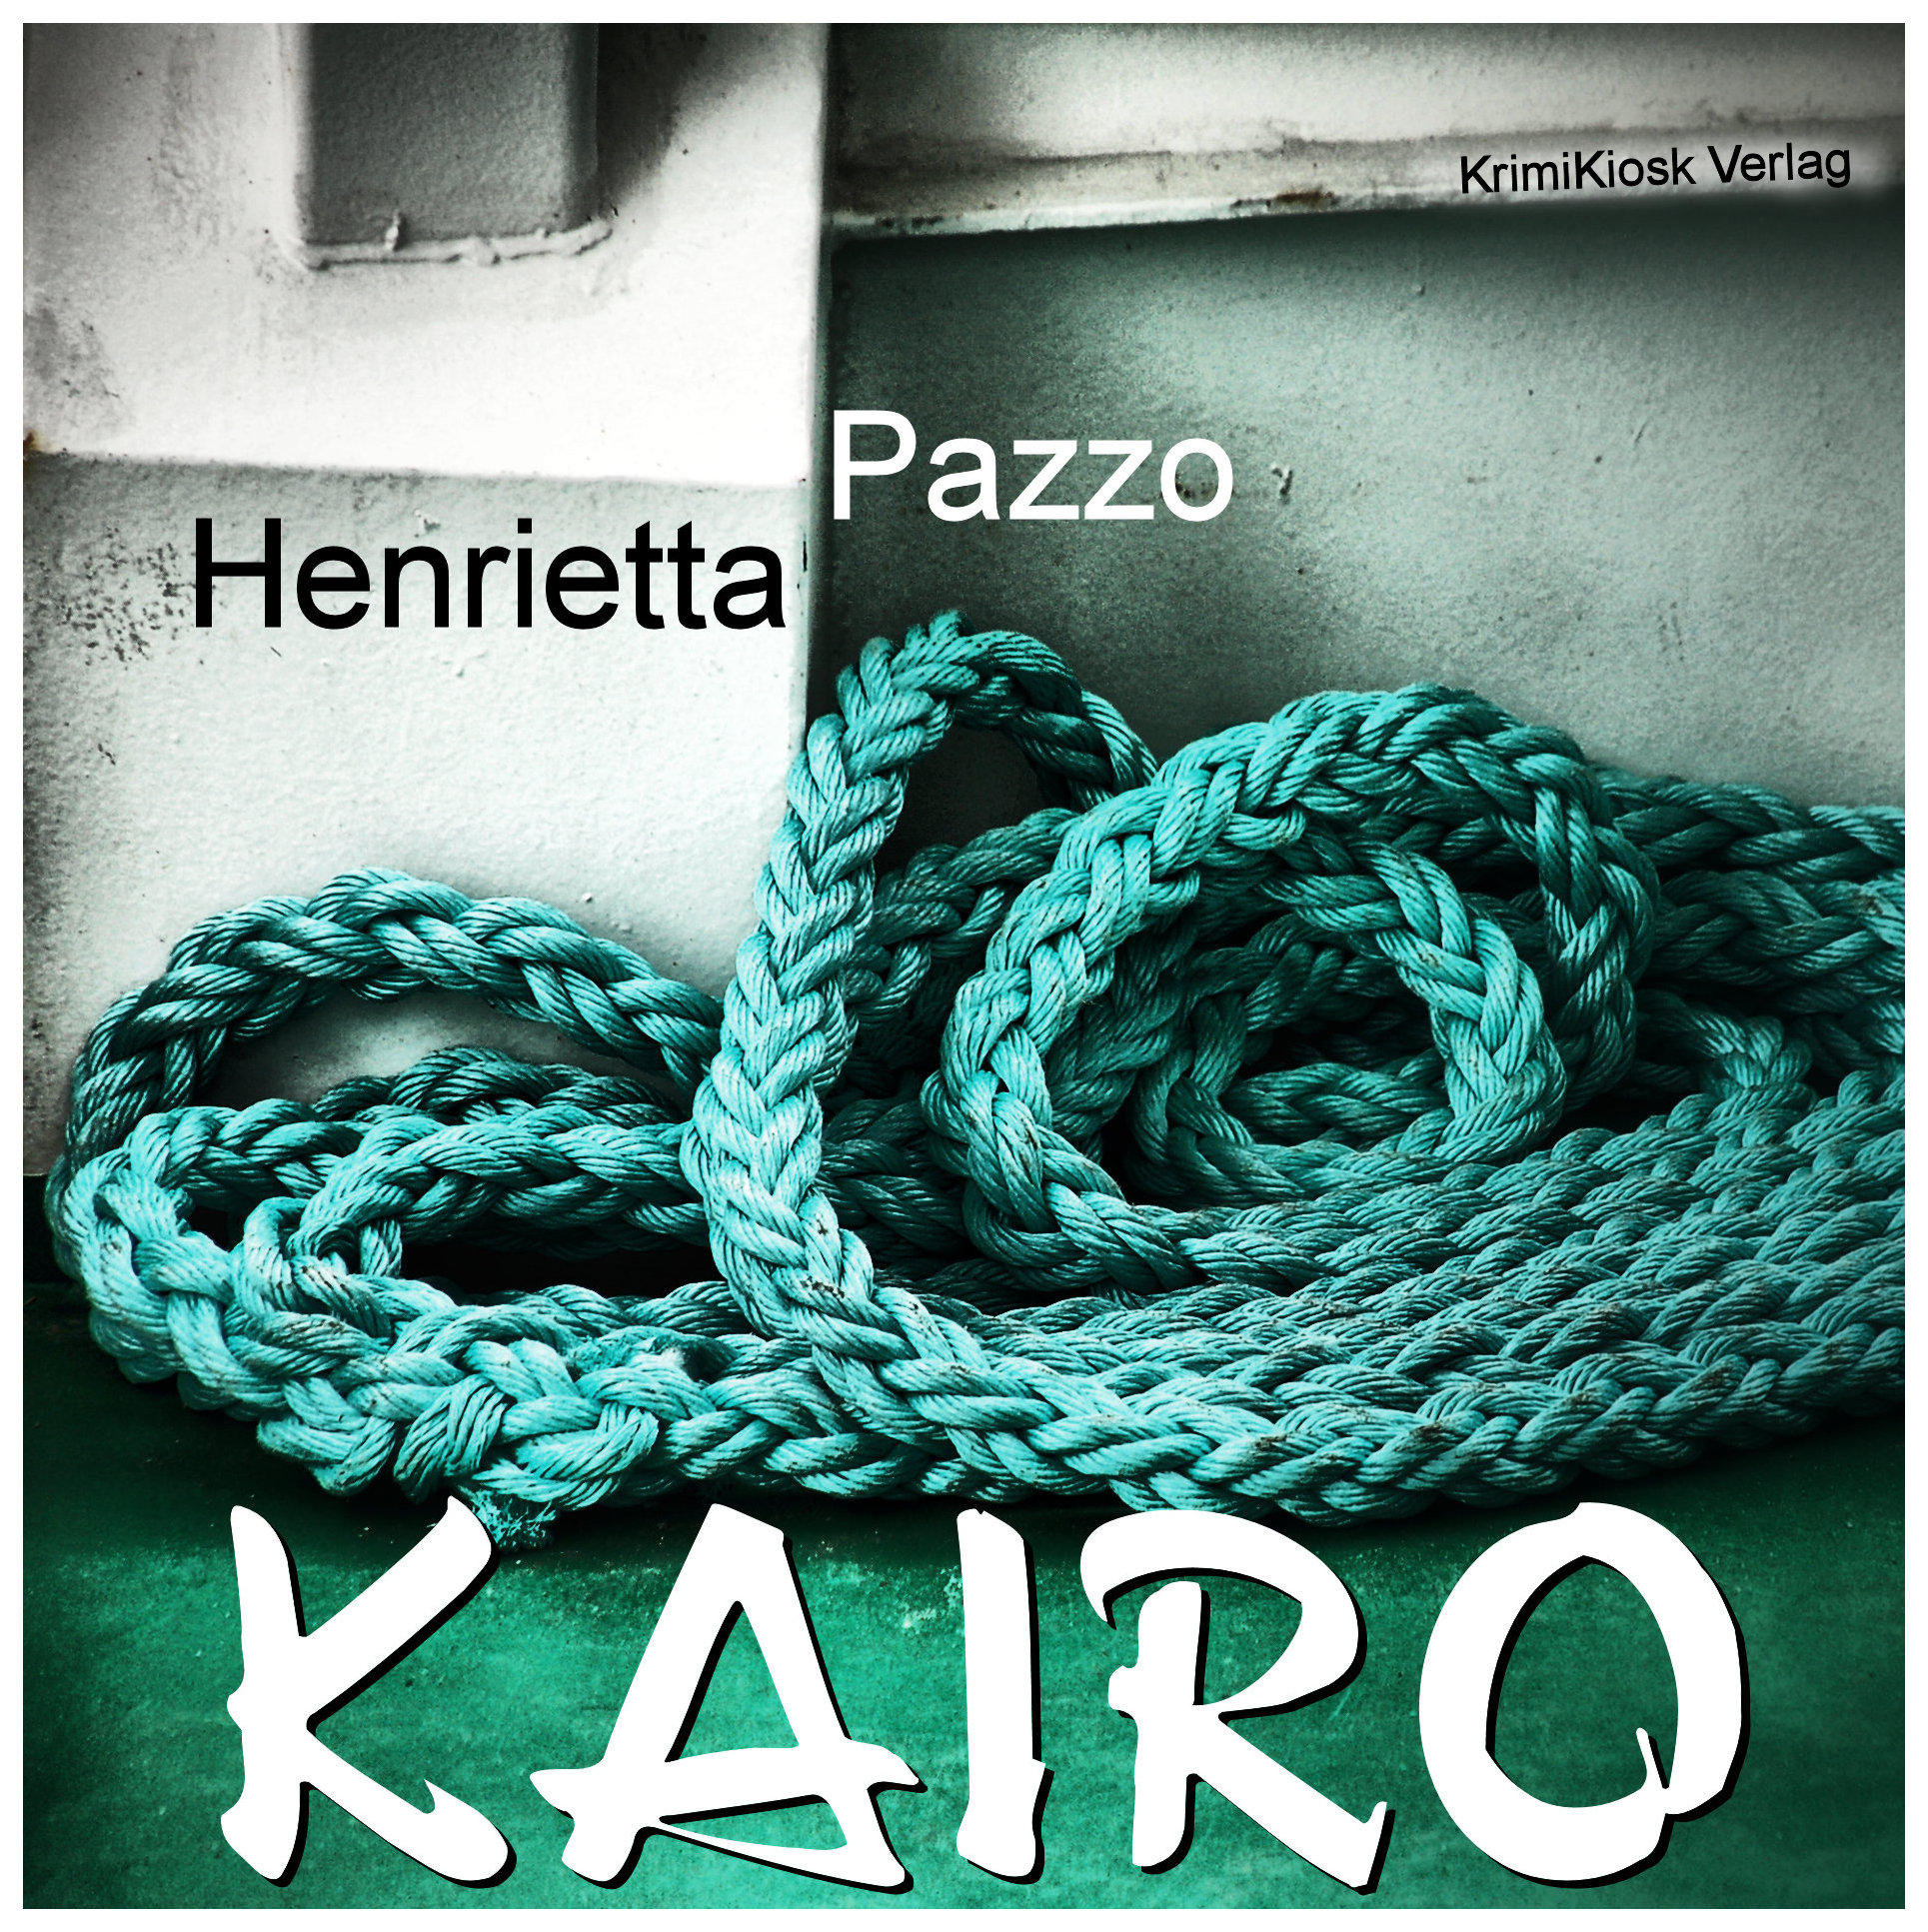 KAIRO  Episode 08 Kriminalroman von Henrietta Pazzo